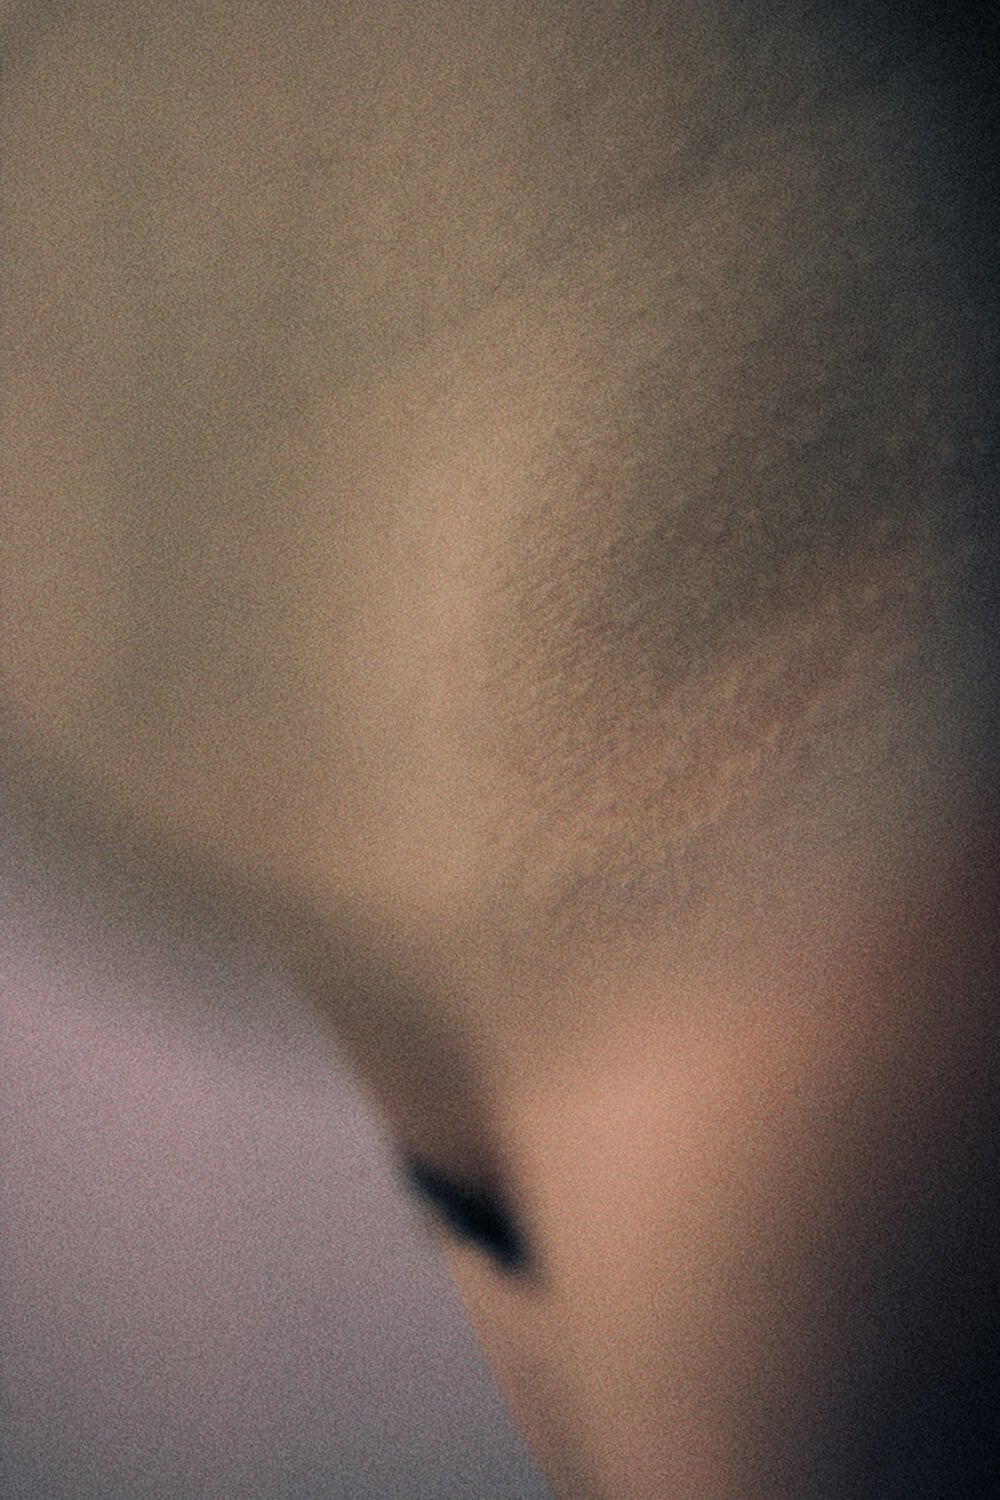 SkinPhotography-MagnusElvarJonsson005.jpg